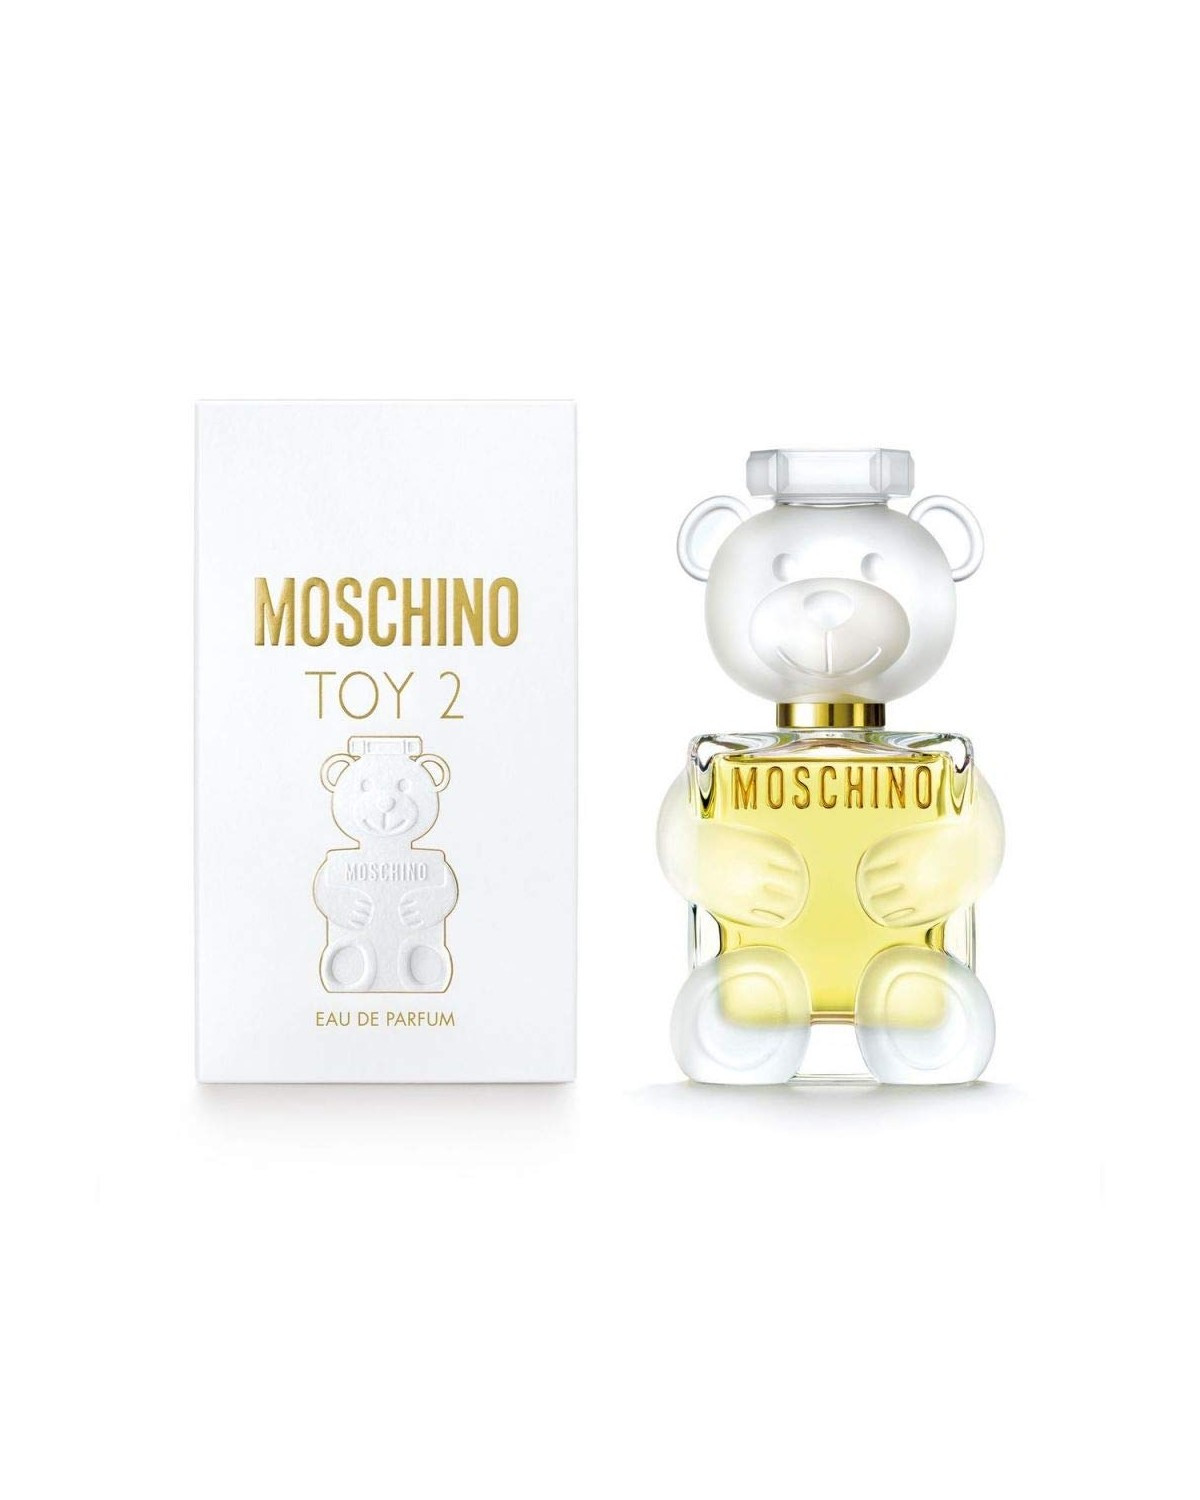 Perfume Toy2 Moschino (1)